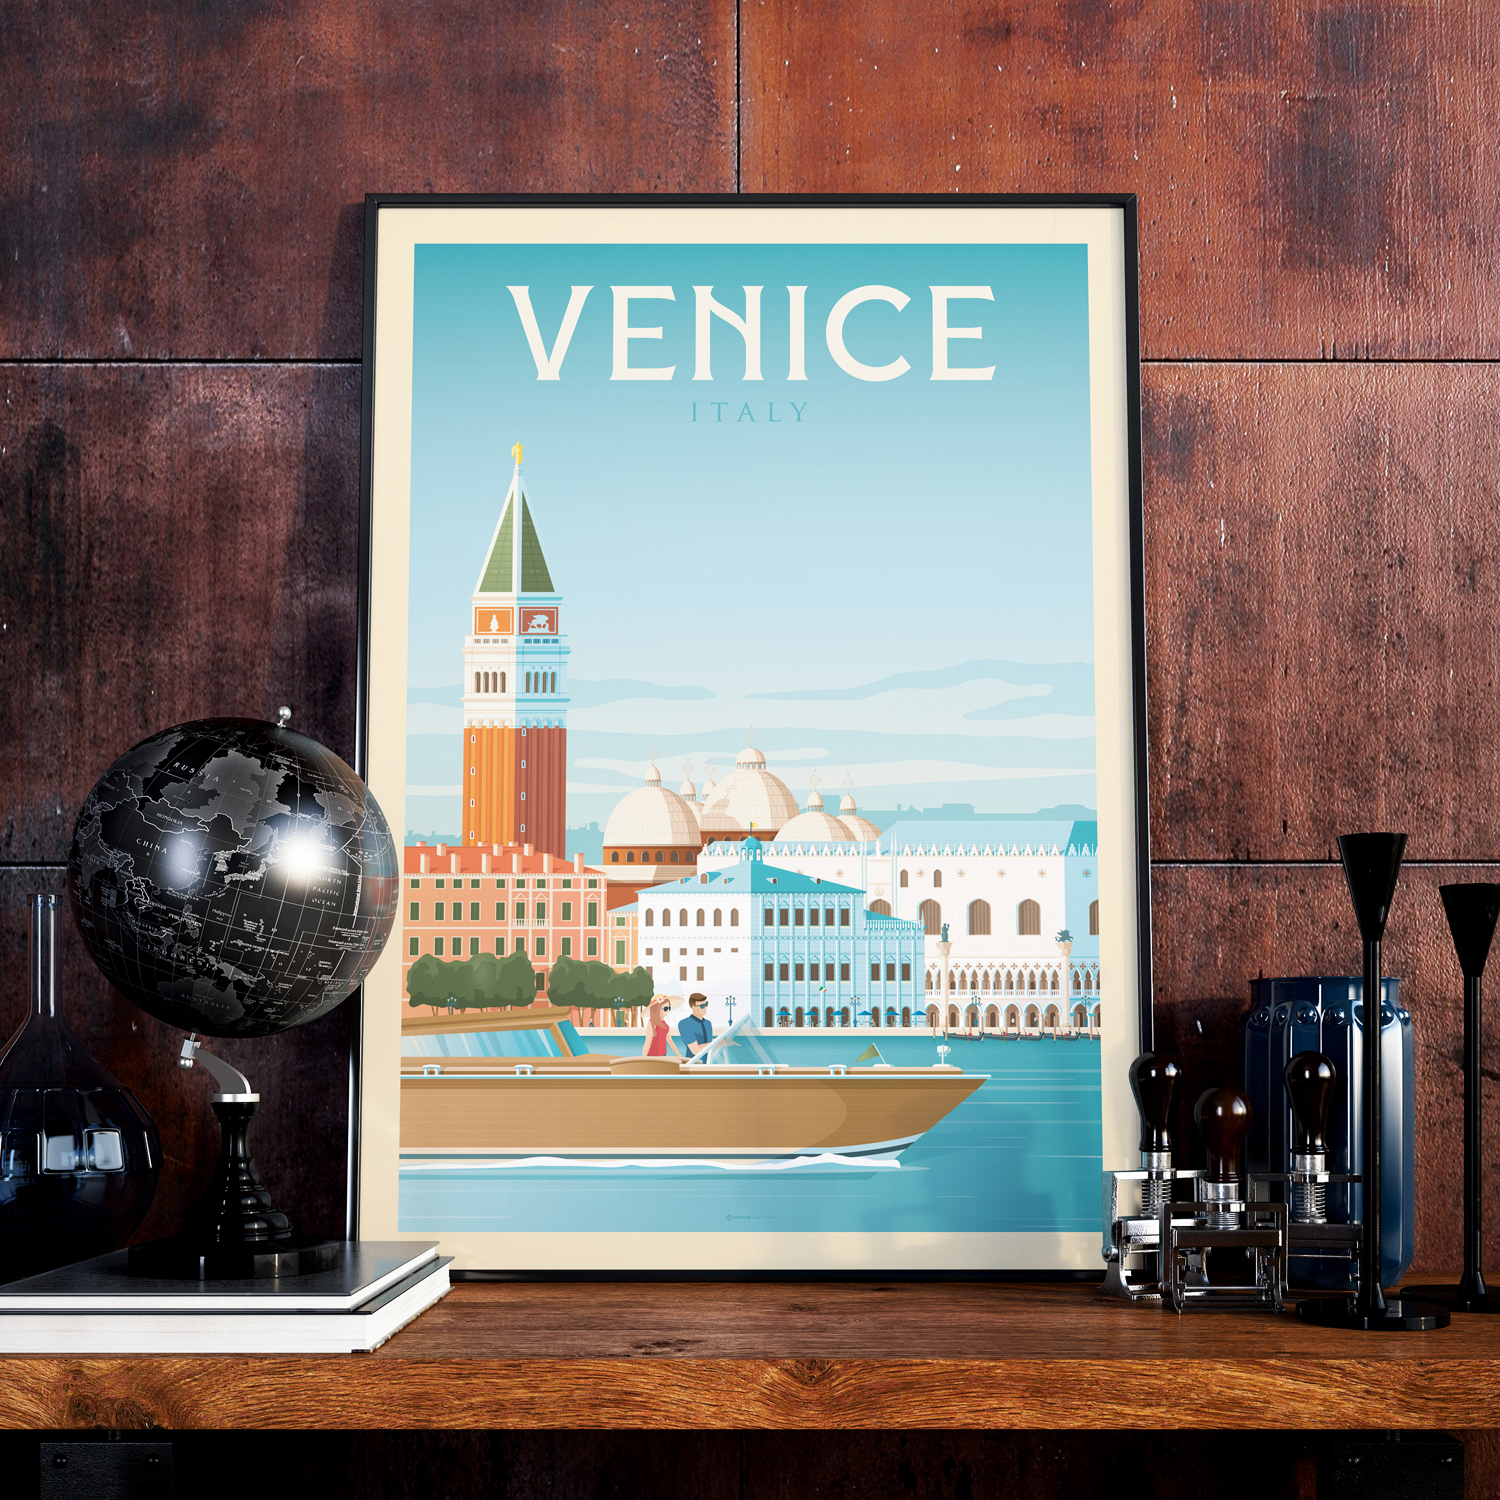 Venice Italy Retro Travel Poster Illustration by Francesco Di Beutierio on  Dribbble